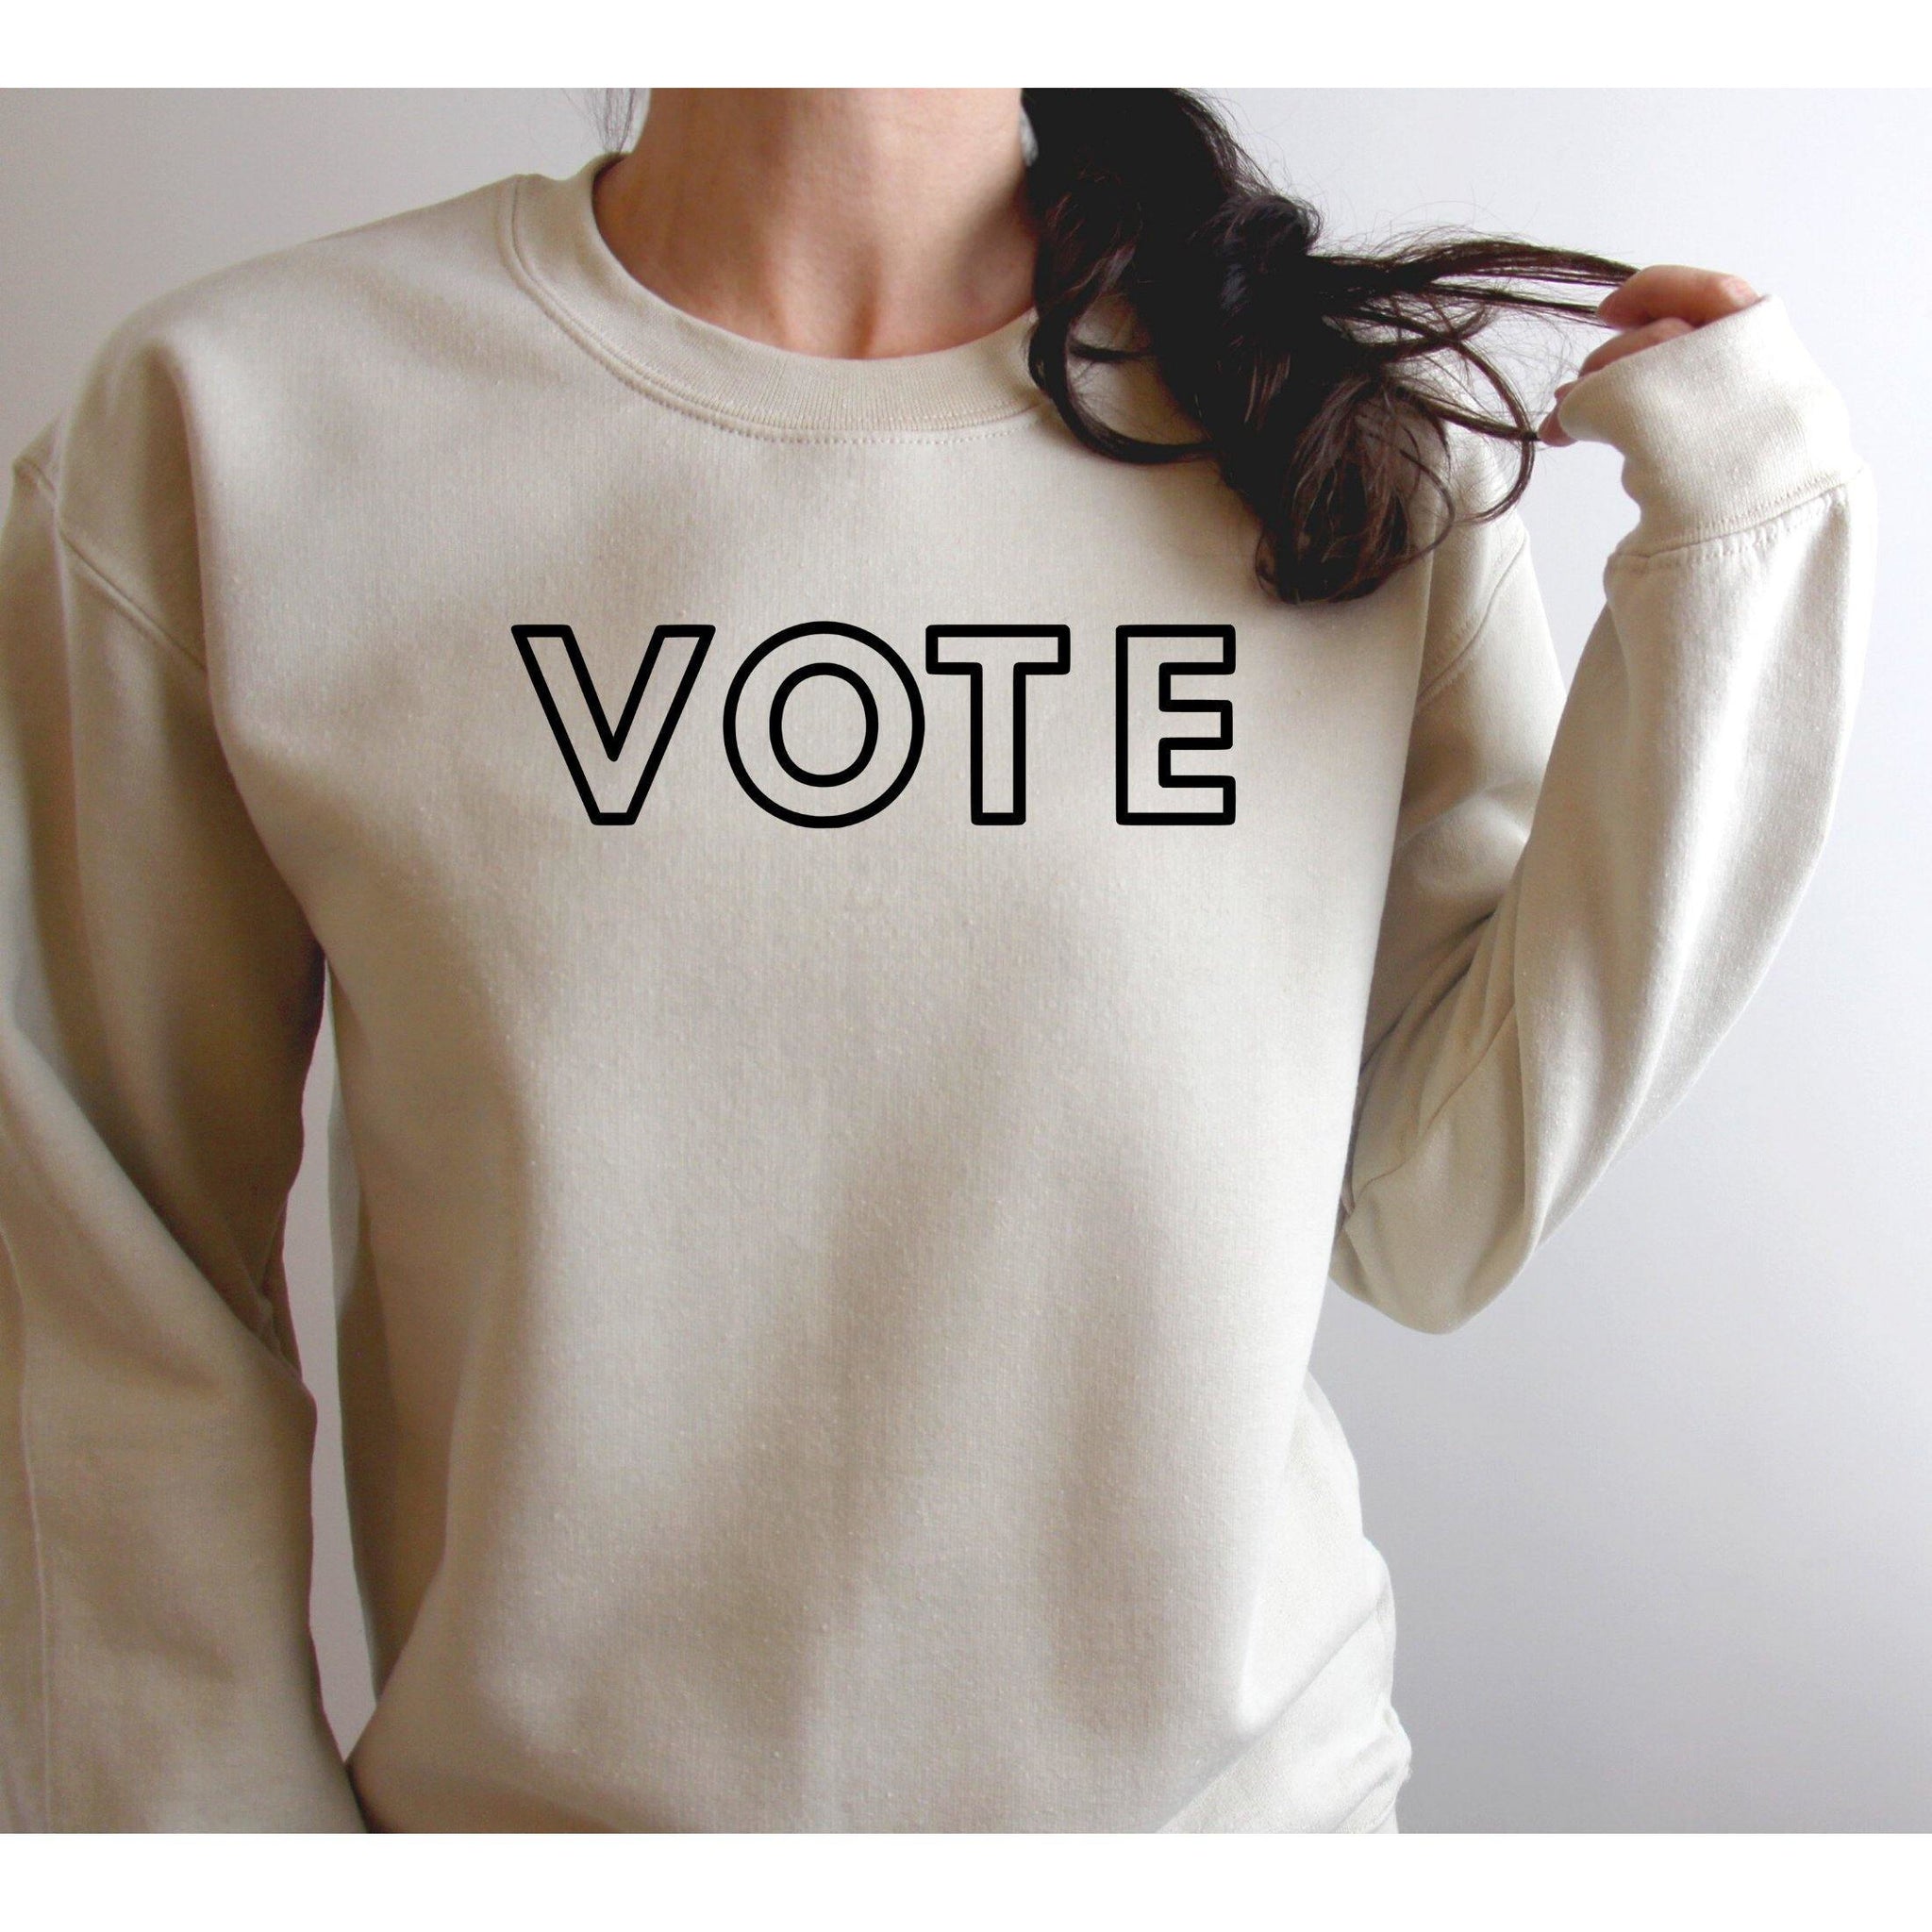 Women's vote sweatshirt - With Love Louise